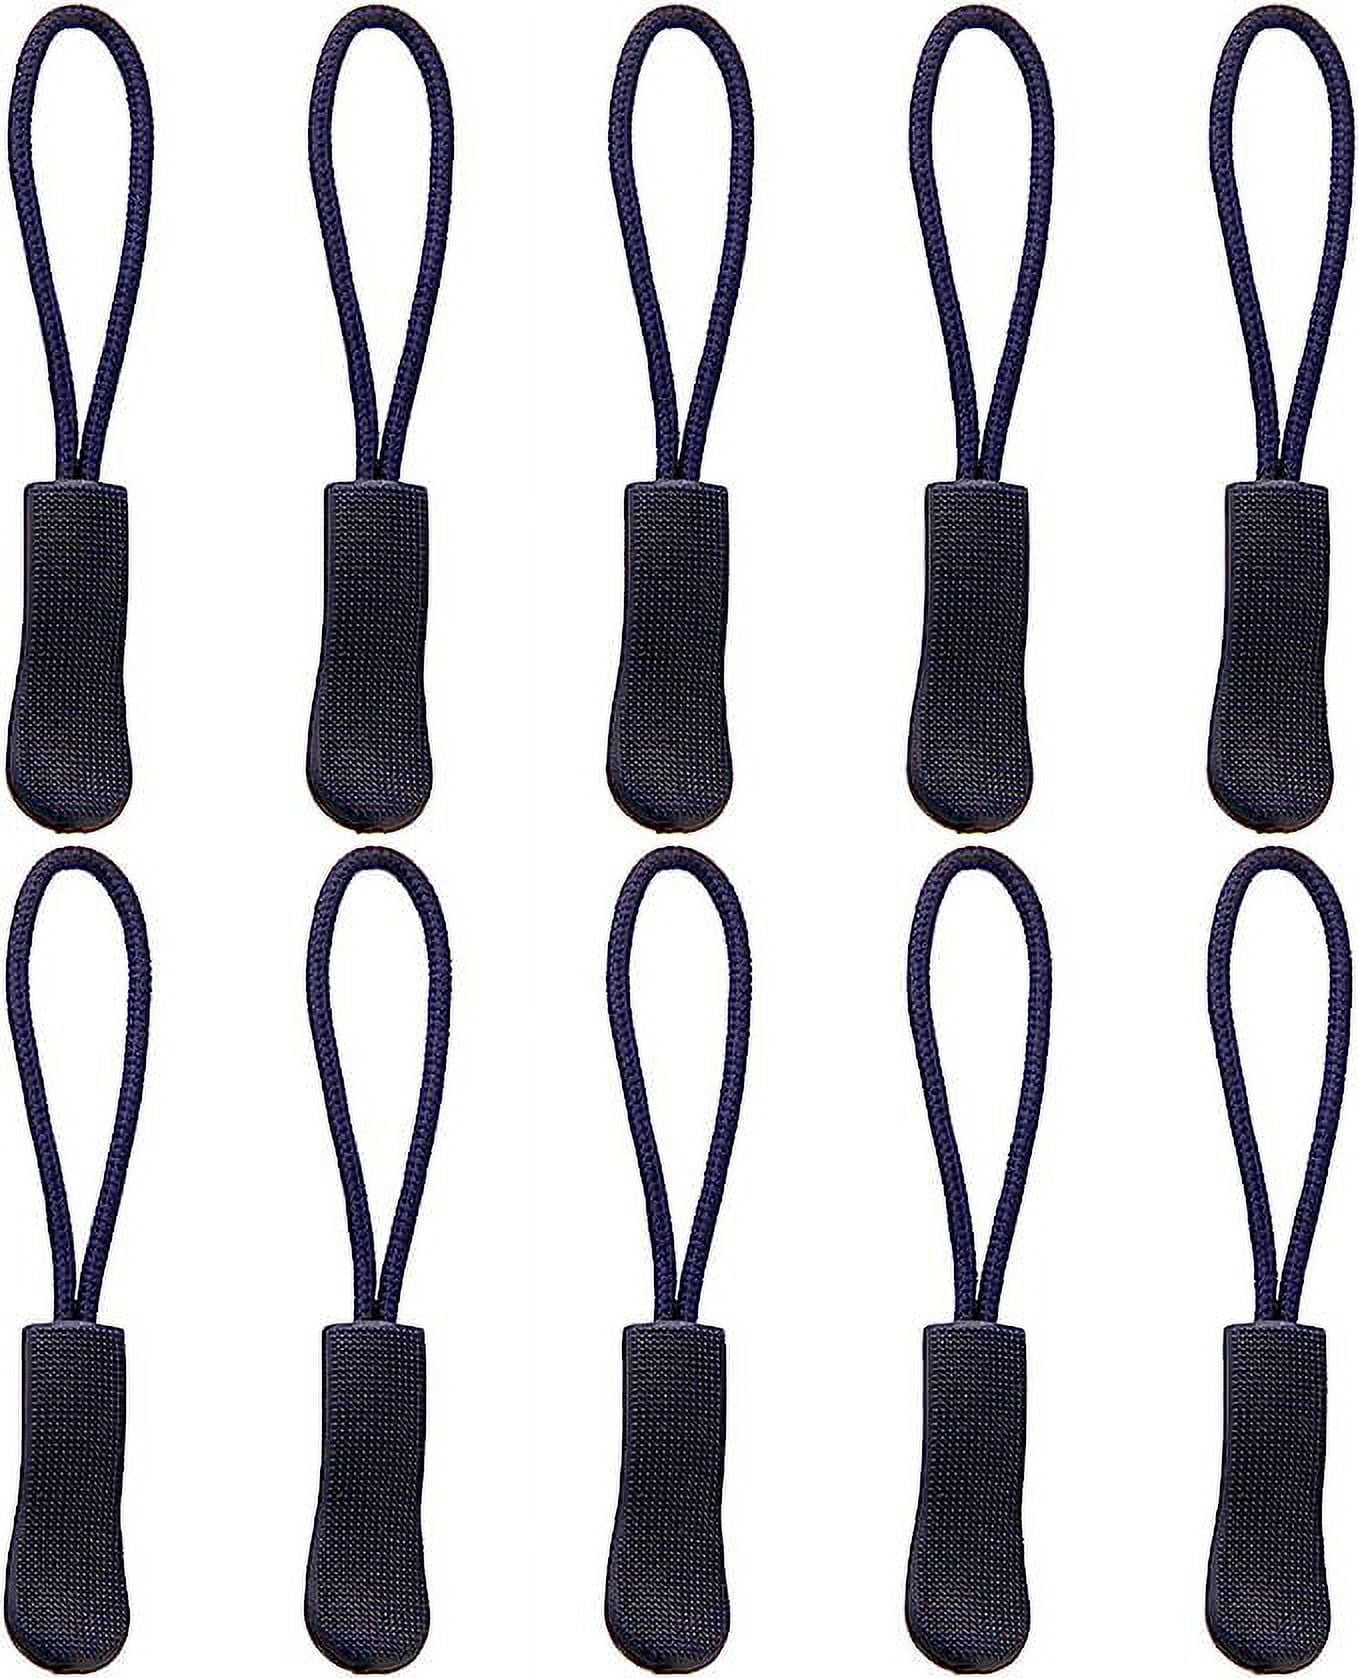 10pcs Replacement Zipper Pulls Black Zipper Pull Cord Extender For  Backpacks, Jackets, Luggage, Purses, Handbags